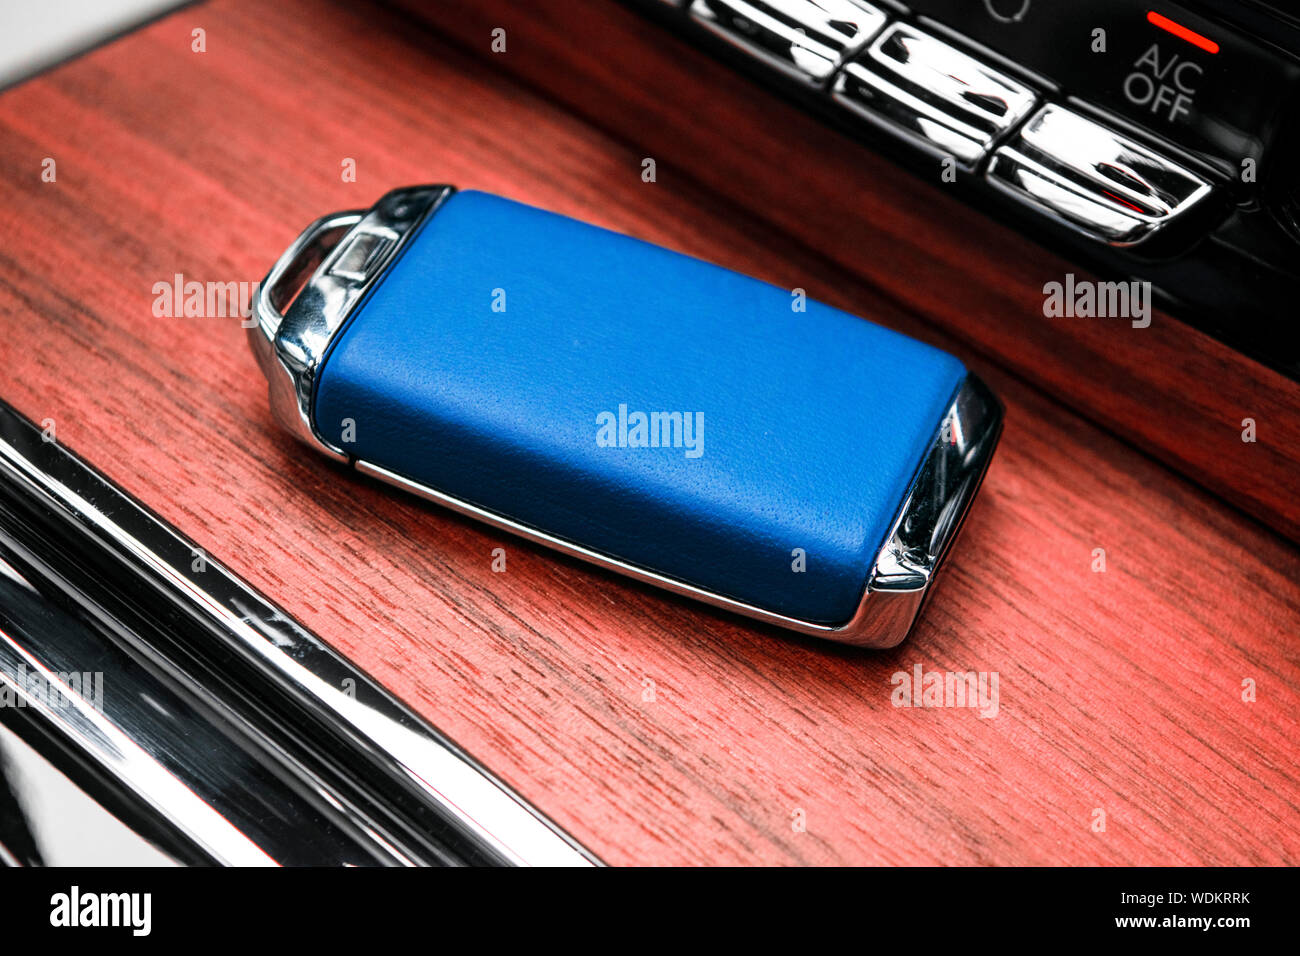 Closeup inside vehicle of wireless blue leather key ignition on natural wood panel. Wireless start engine key. Car key remote isolated. Modern Car key Stock Photo